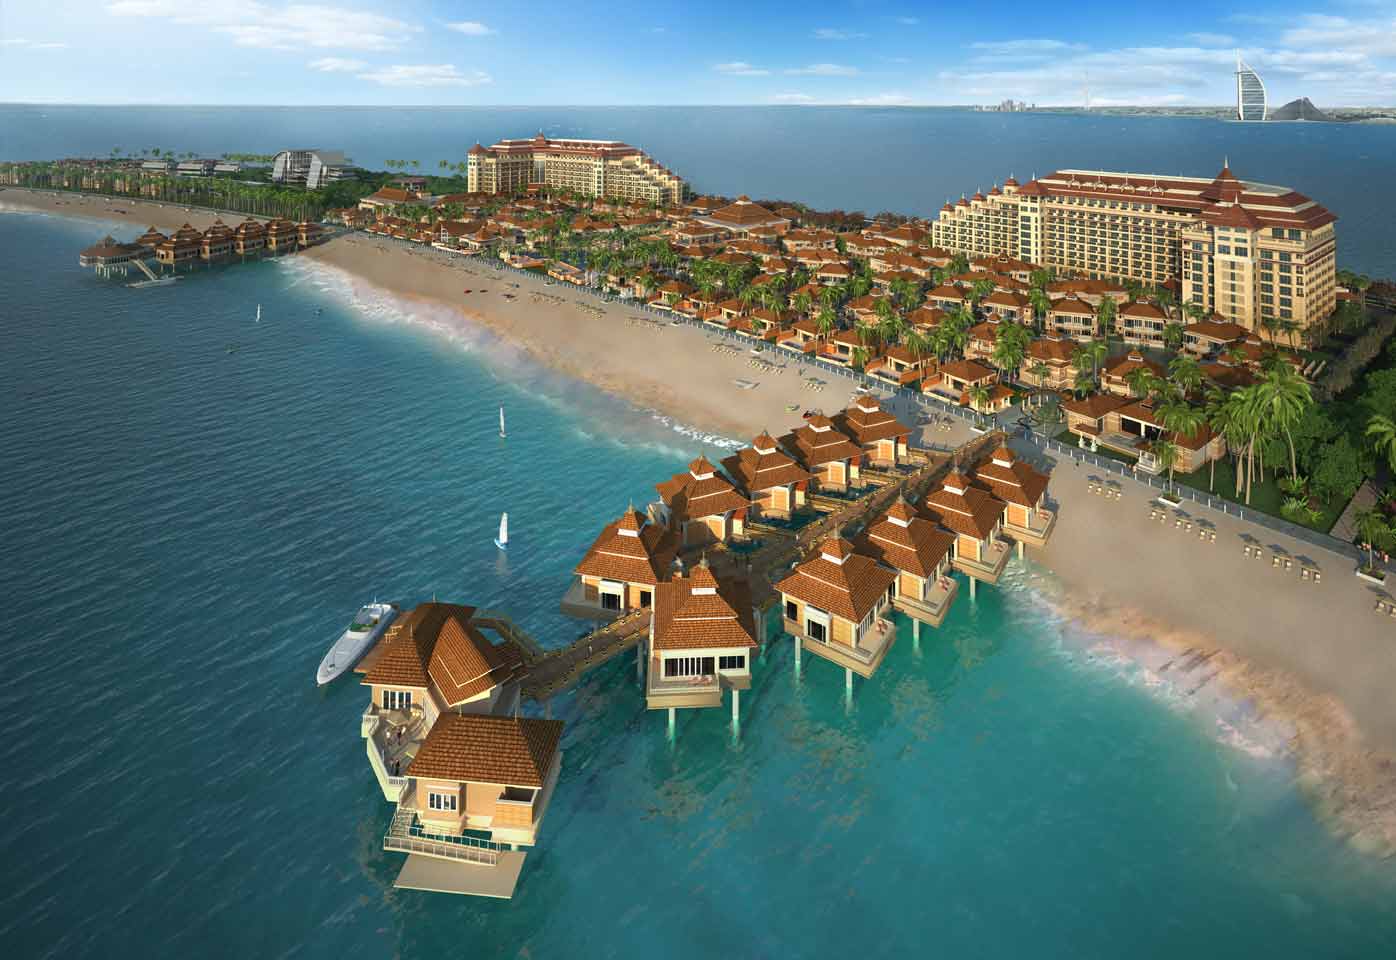 Movenpick claims Dubai's first all-inclusive hotel - Business